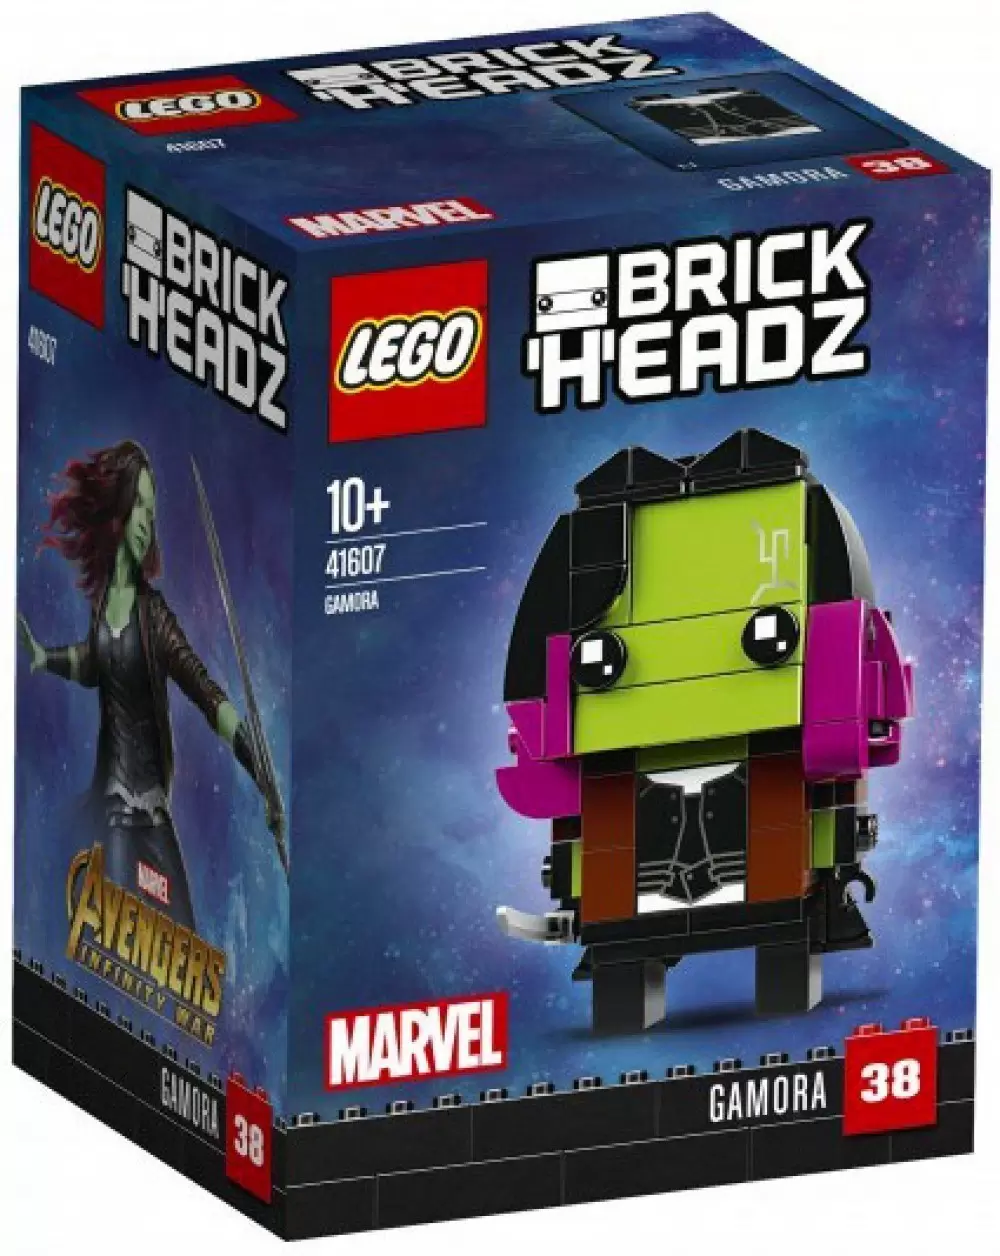 LEGO BrickHeadz - 38 - Gamora